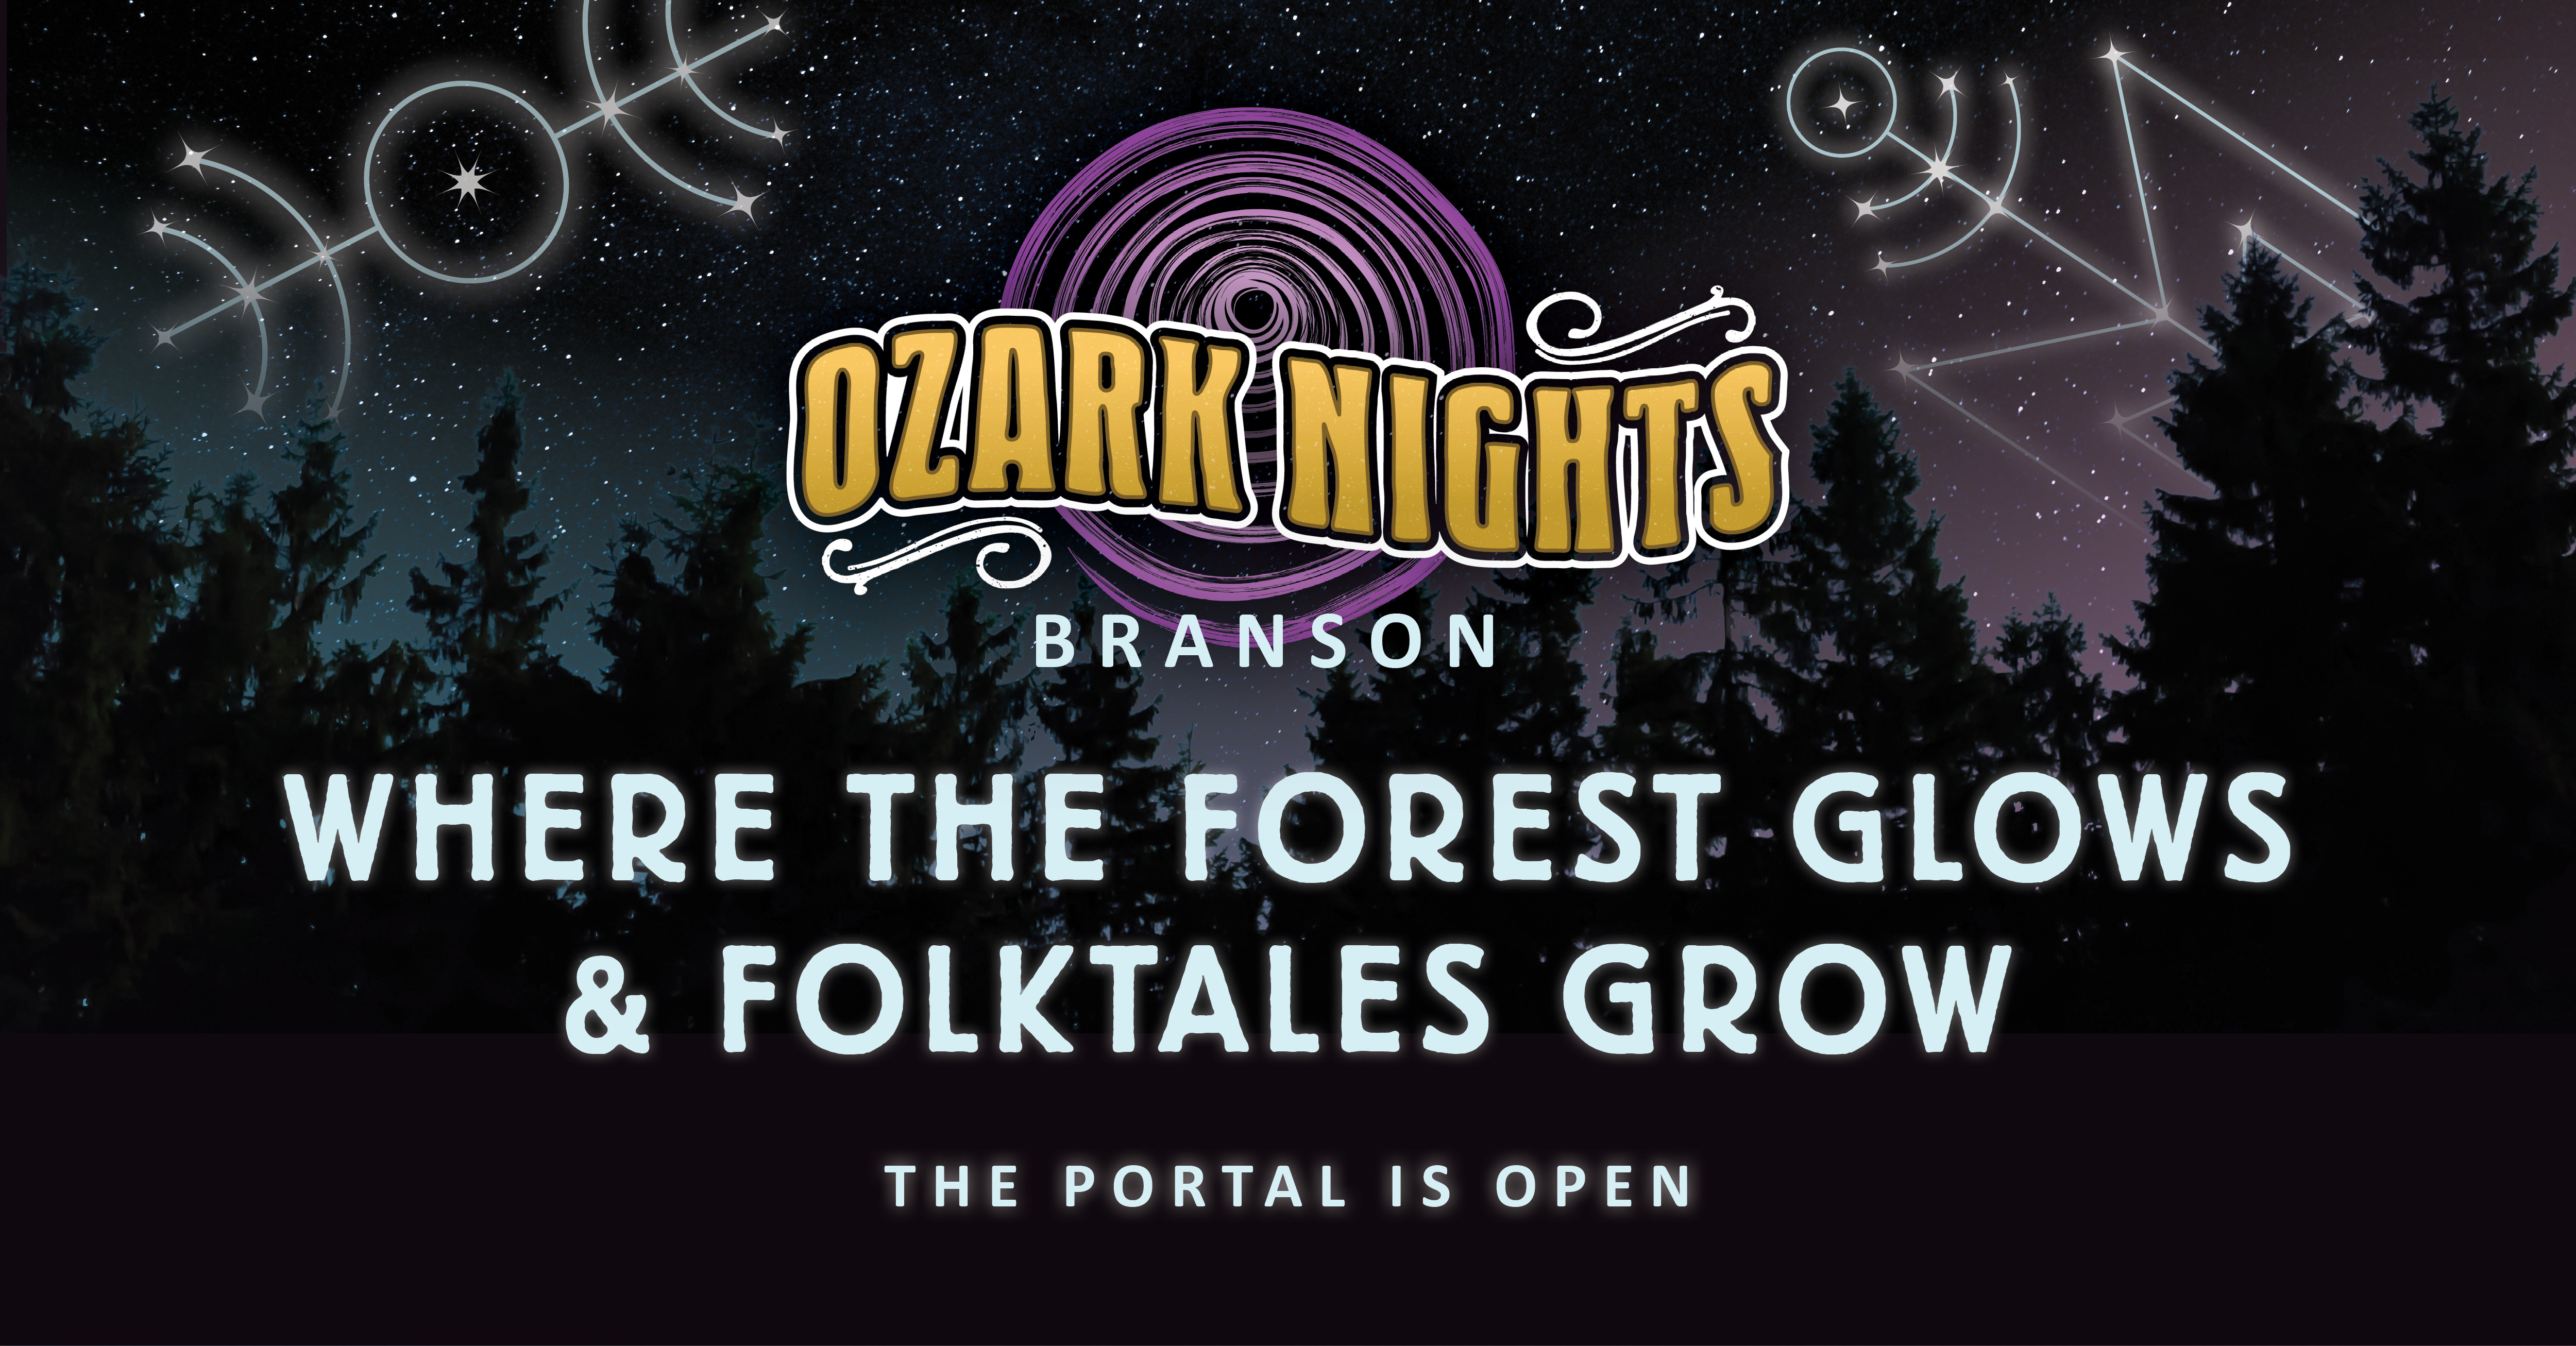 Logos & Images Ozark Nights